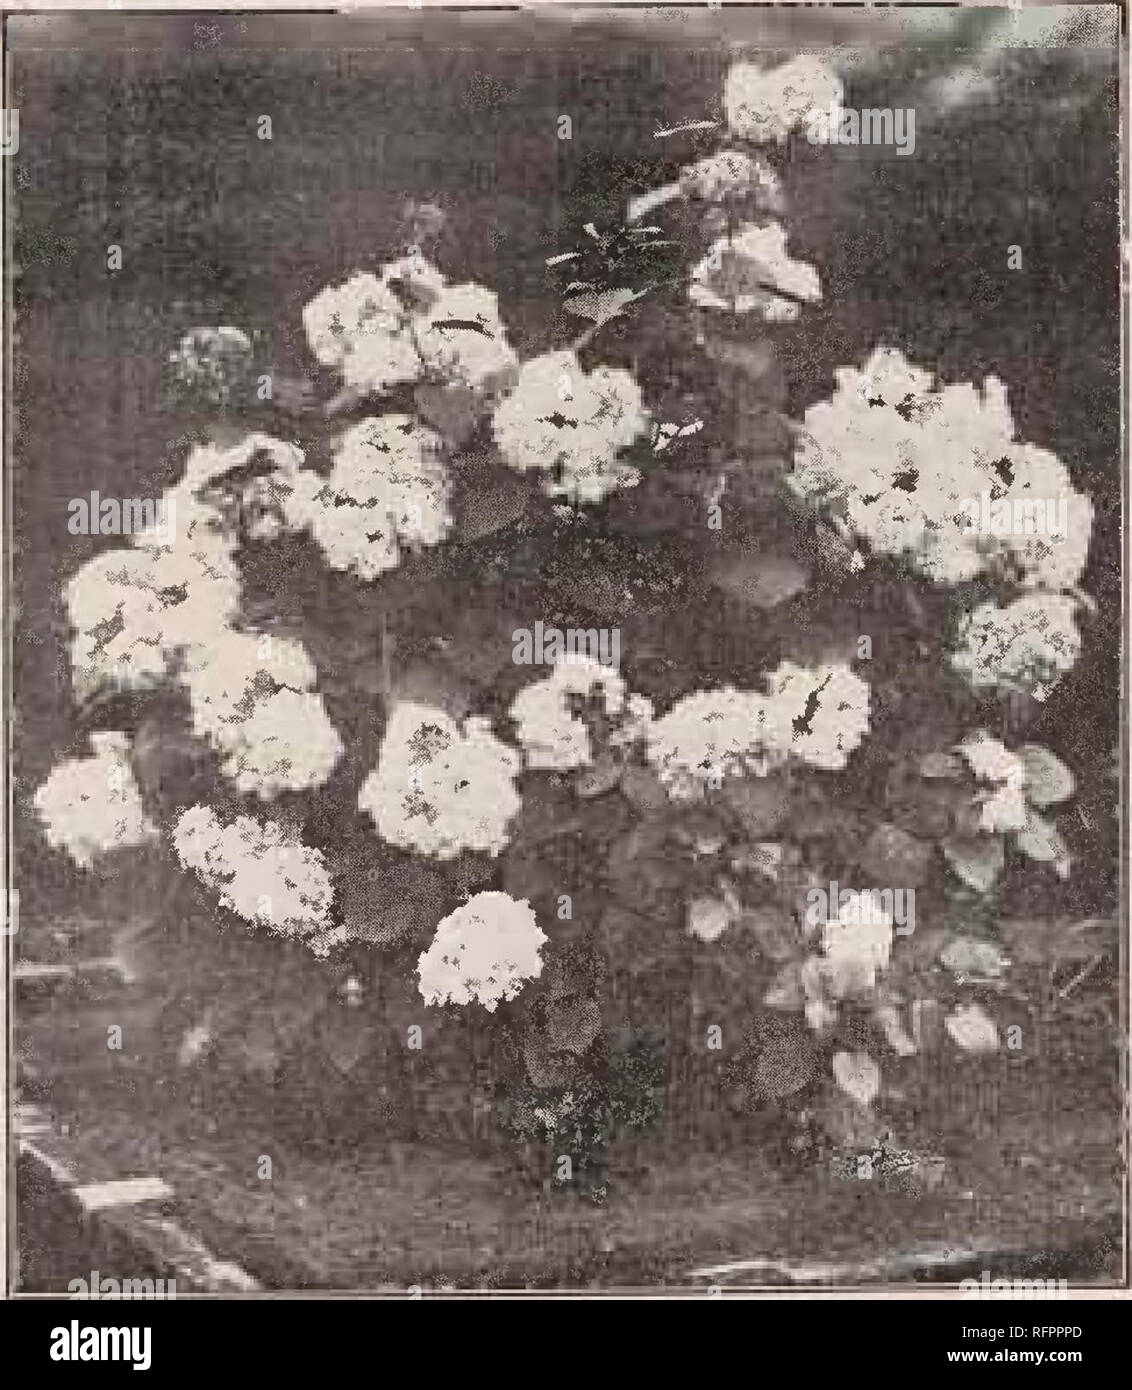 . Descriptive catalogue of the Yokohama Nursery Co., Limited. Seed industry and trade; Flowers Catalogs; Fruit Catalogs; Trees Catalogs; Shrubs Catalogs. CATALOGUE OF THE YOKOHAMA NURSERY Co., Etd. (1911), 35. height. per 10 Hydrangea involucrata, perfect ball white • flower (pot grown) 1 ft. $1.30 Hydrangea Scandens, climbing hydrangea (see climber) 1 ft. 1.70 Sellizouliragma liy dran- geoides, (Climber). 1 ft. 1.70 Hydrangea panicnlata. 1-11 ft. 1.90 Hydrangea involucrata pleno 1-11 ft. 1.70 Hydrangea liortensia Rosea, a new pink hydrangea ; 1-11 • 2-00 HYUKASGliA AKBOKKSUKN3. Hydrangea vire Stock Photo